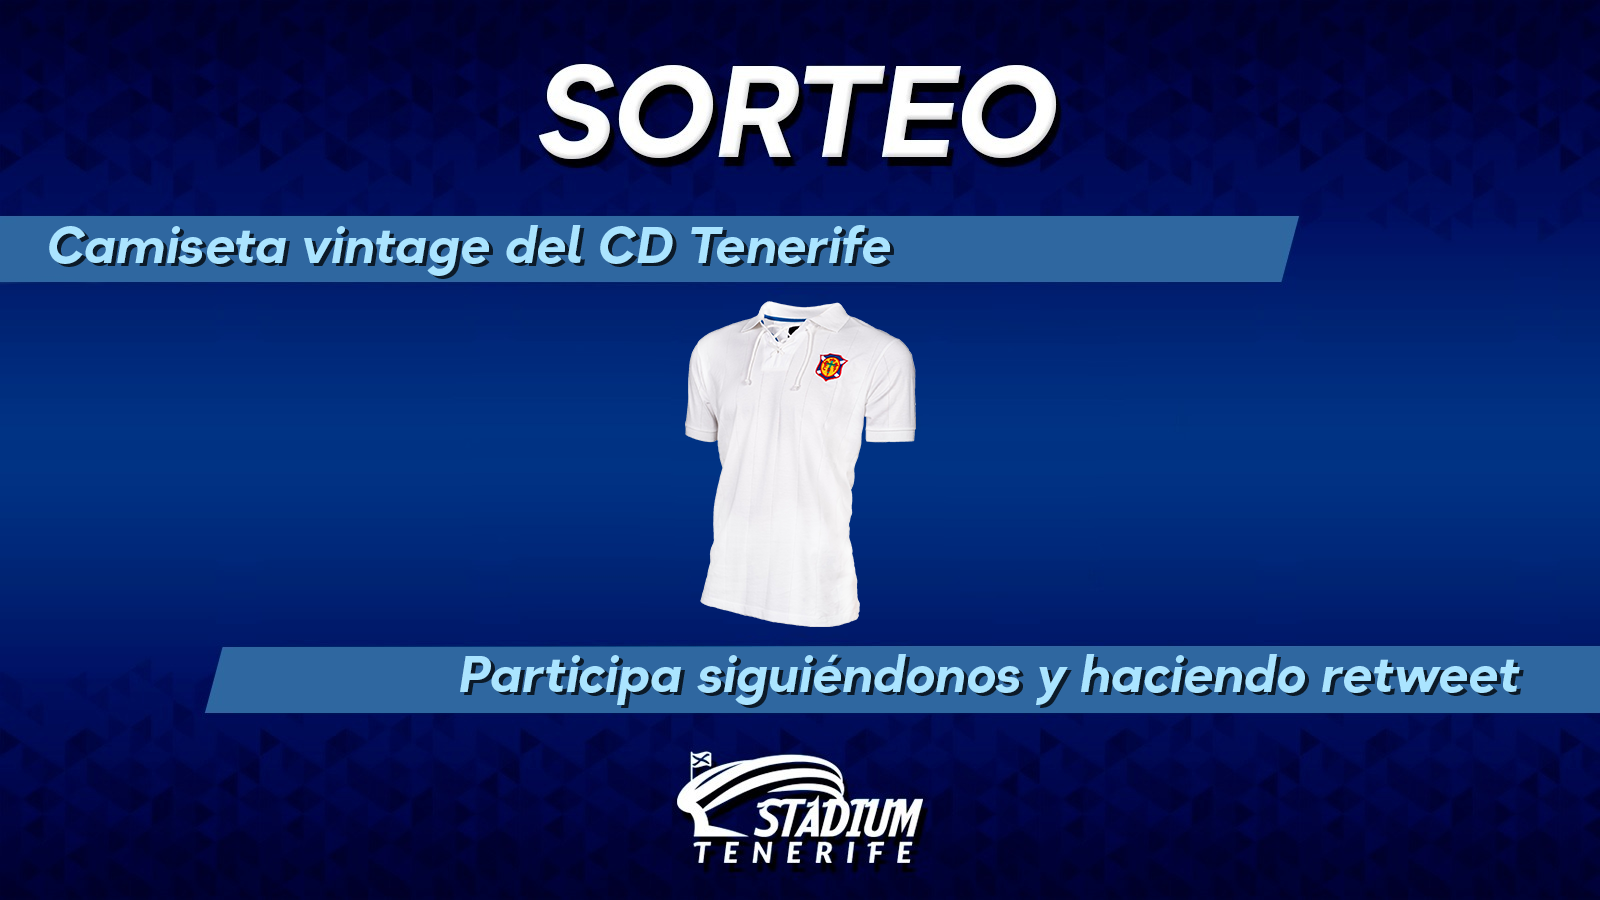 En Stadium Tenerife sorteamos la camiseta vintage del CD Tenerife